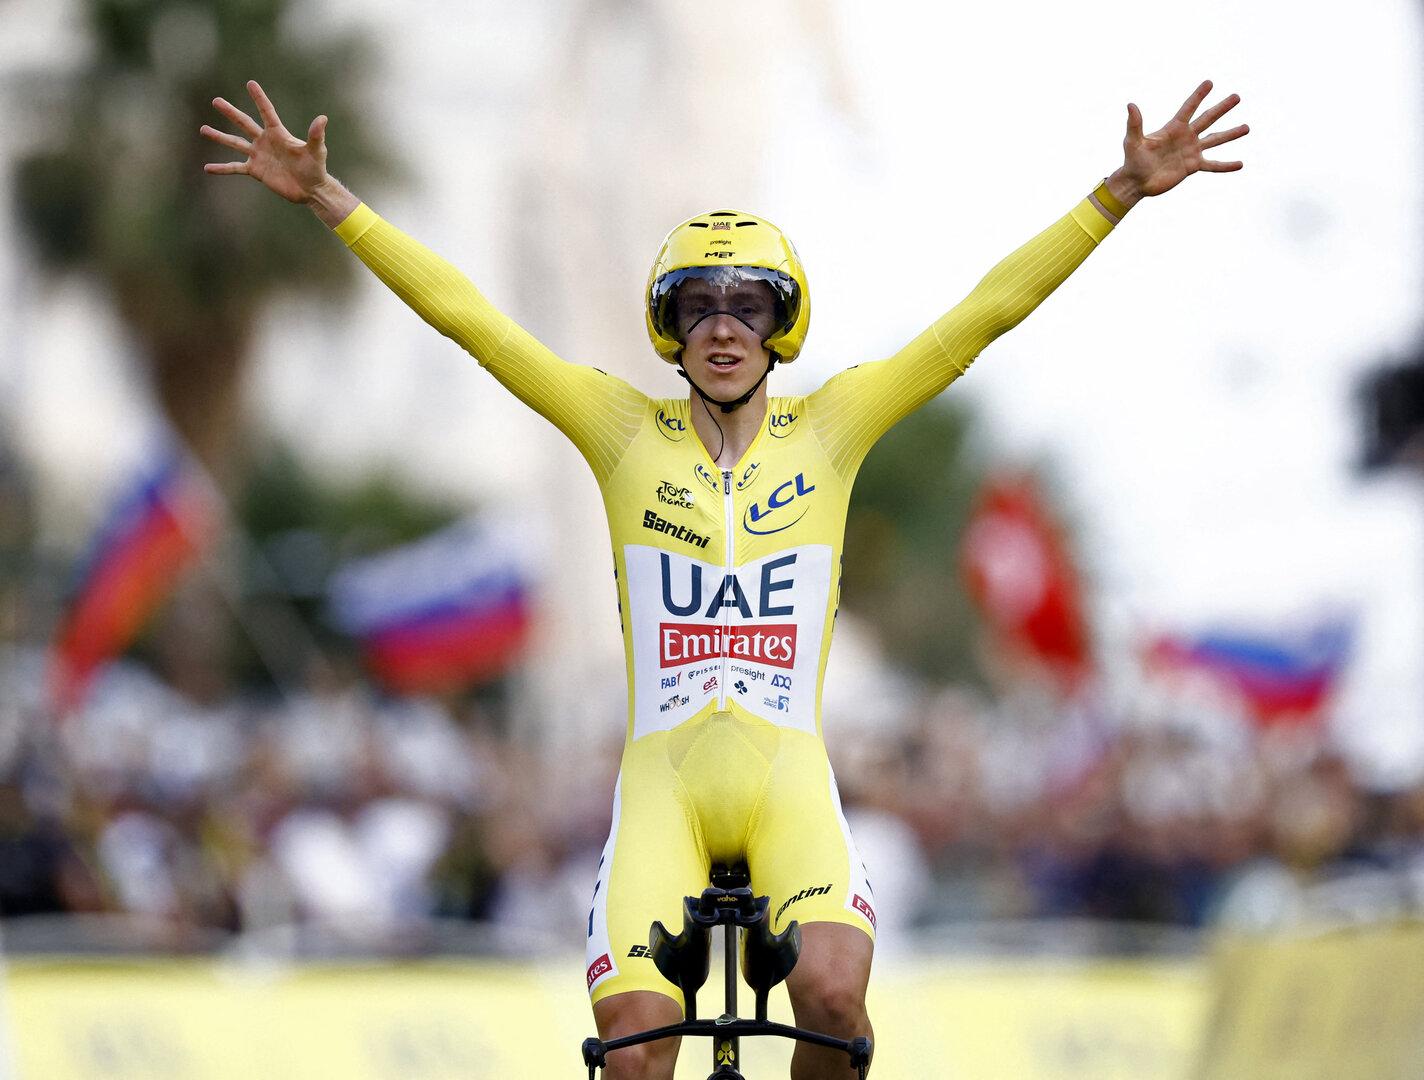 Dritter Gesamtsieg bei der Tour de France für Pogacar